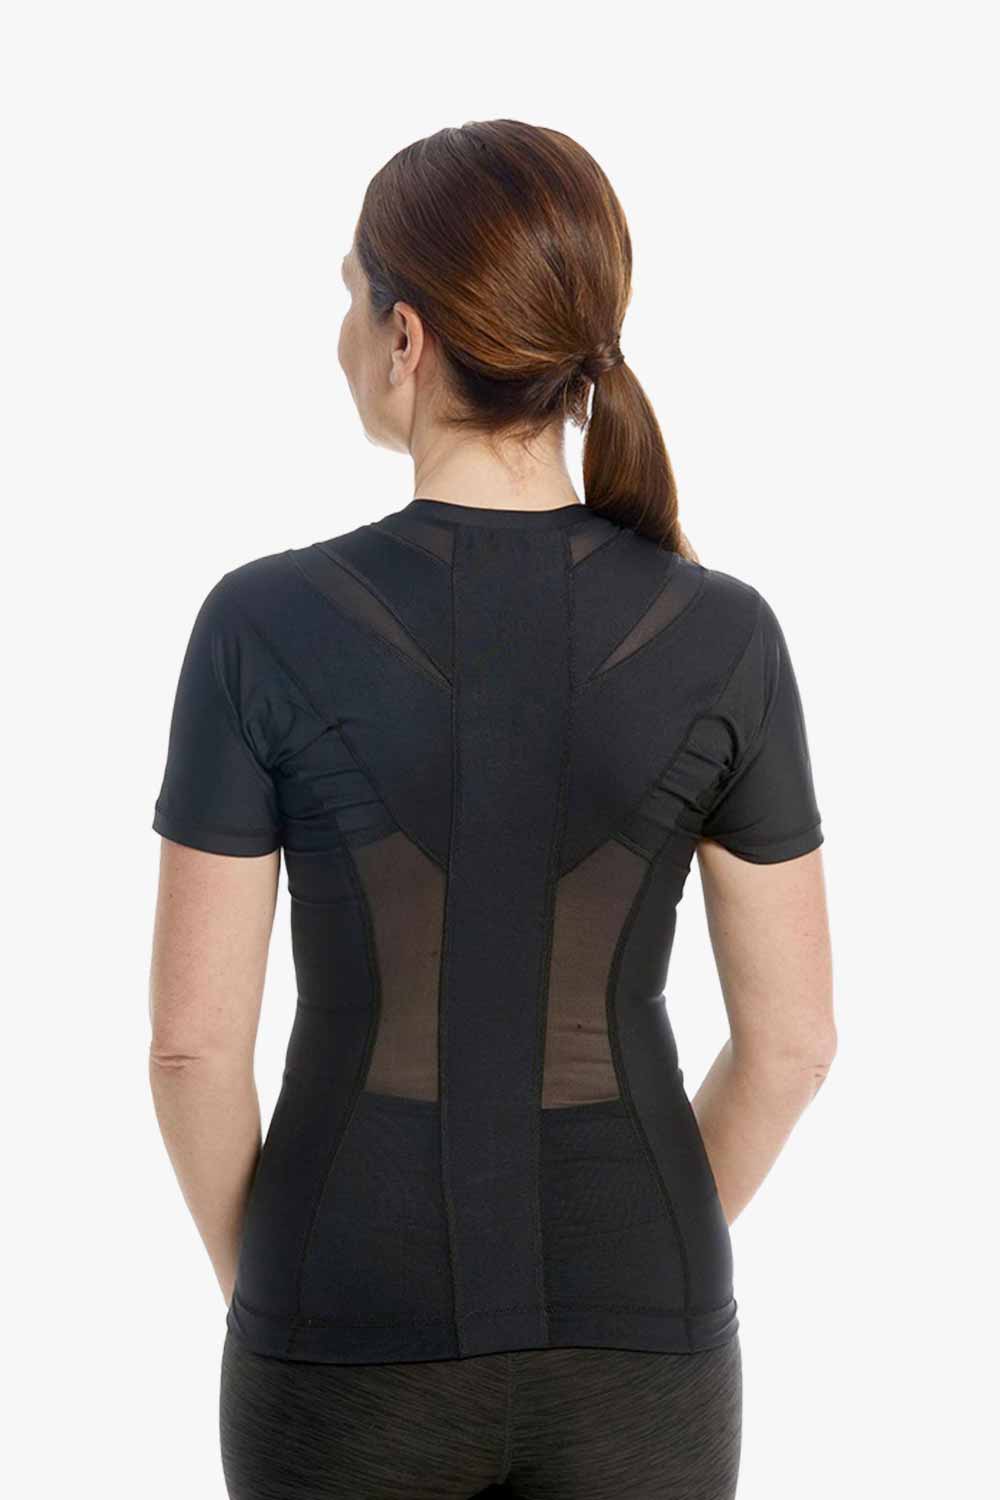 DEMO | Women's Posture Shirt™ Zipper - Sort